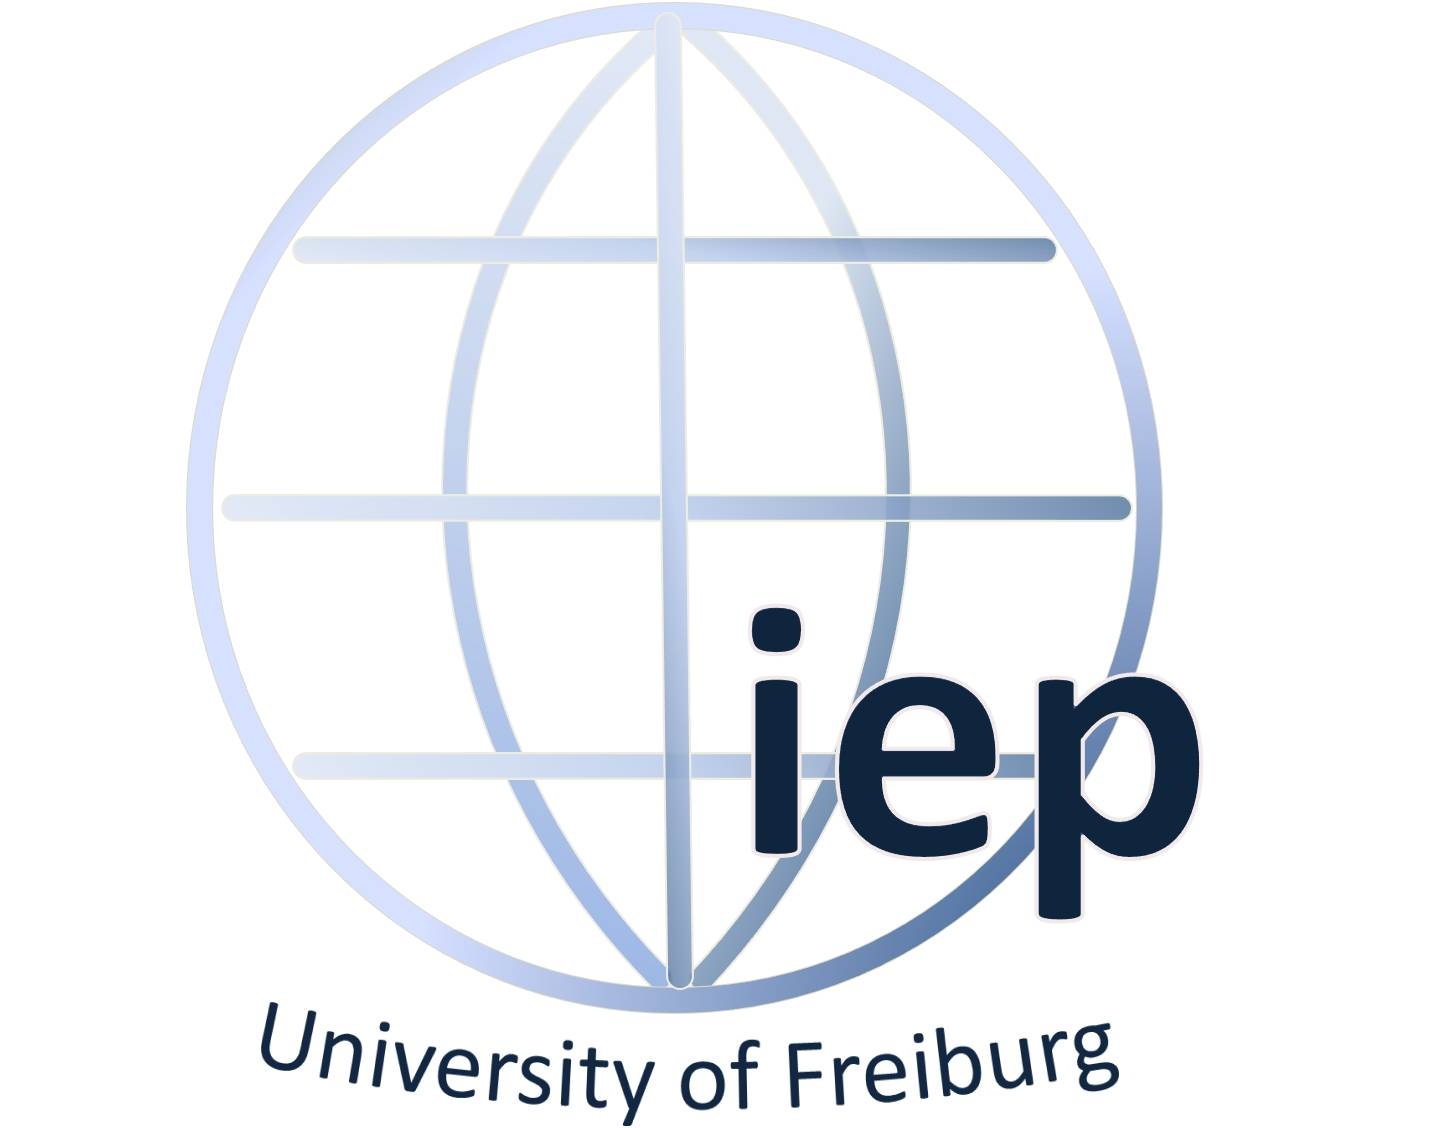 Logo IEP